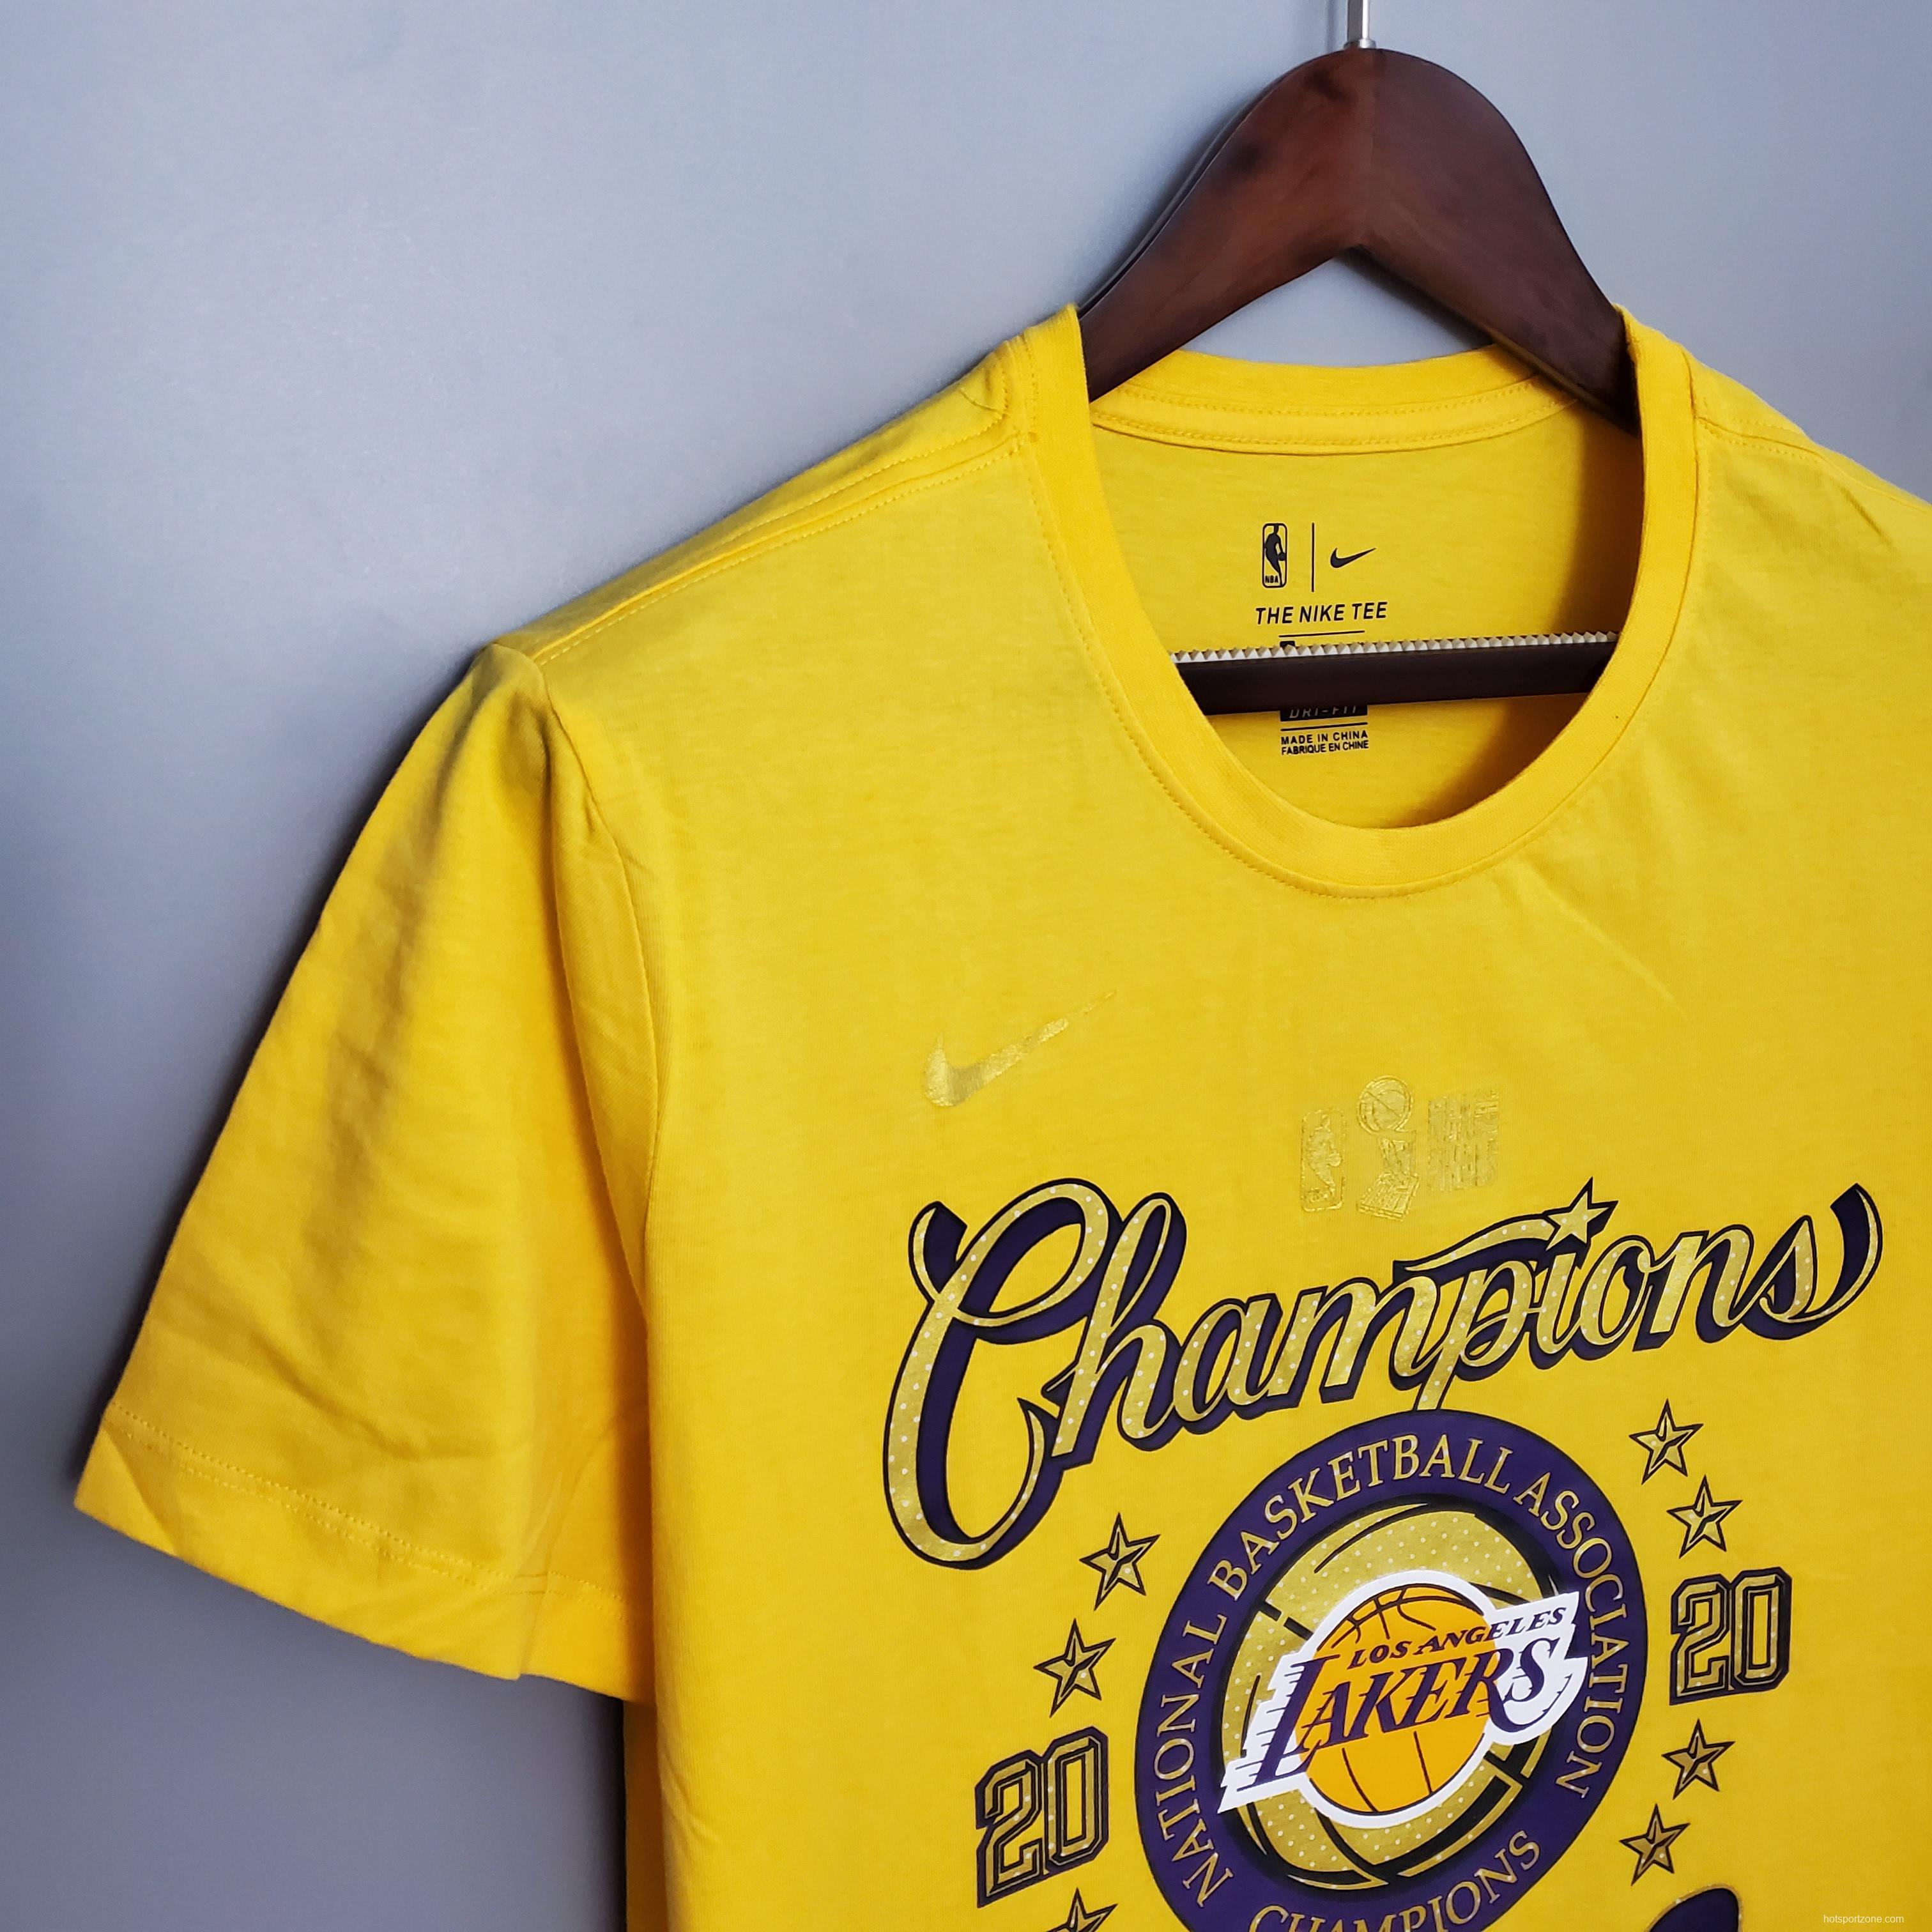 Lakers championship shirt yellow